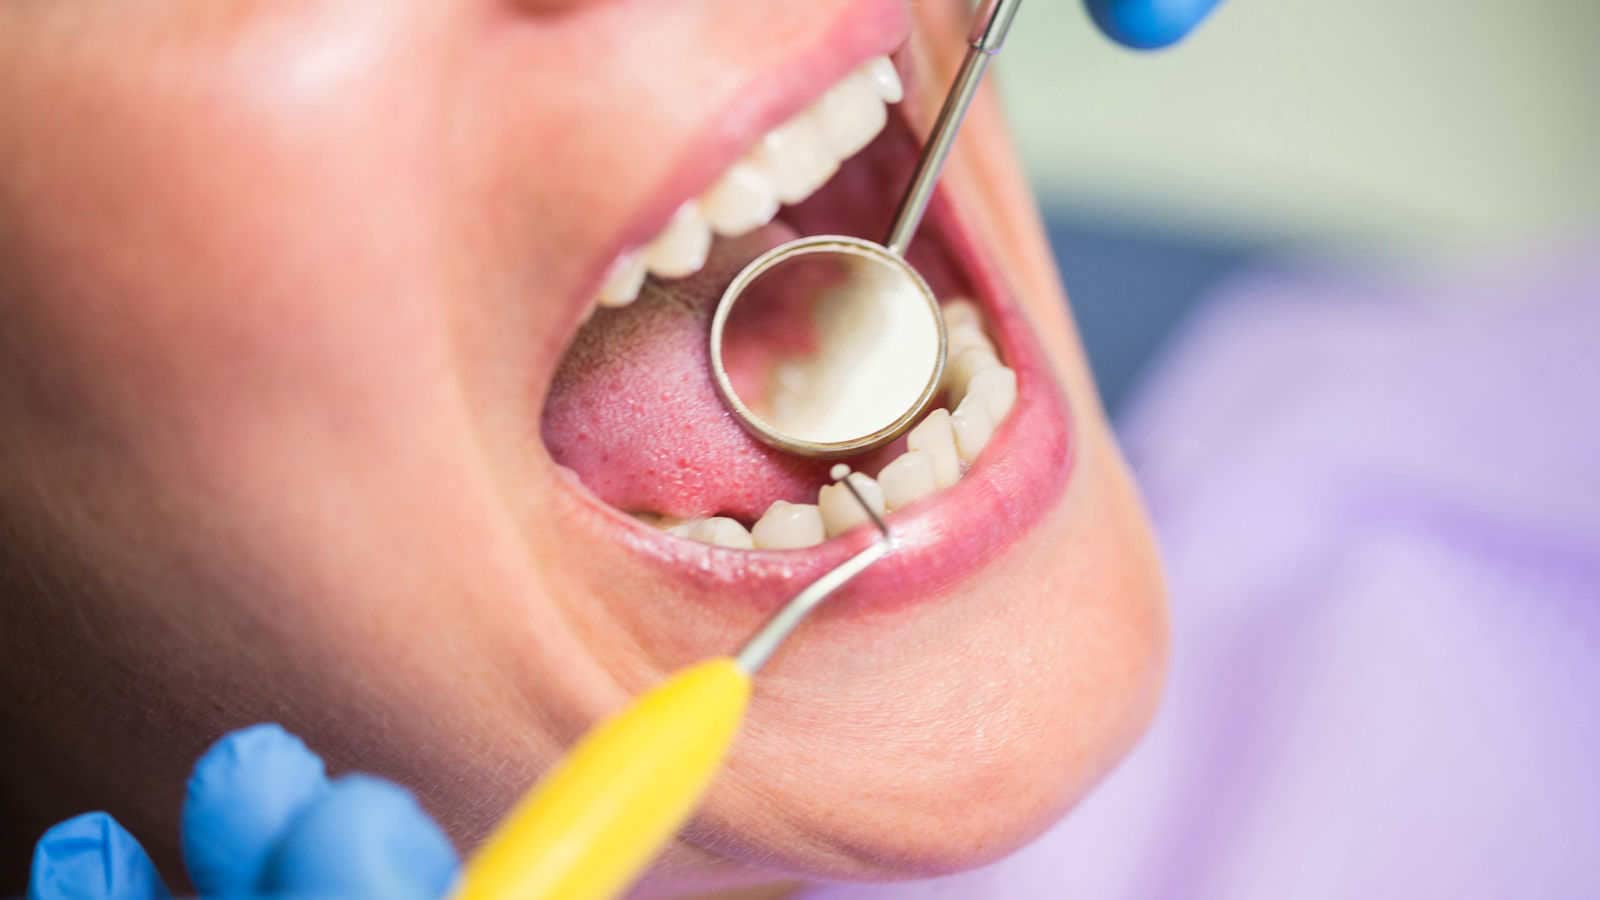 Rosenzweig Orthodontics of Bend